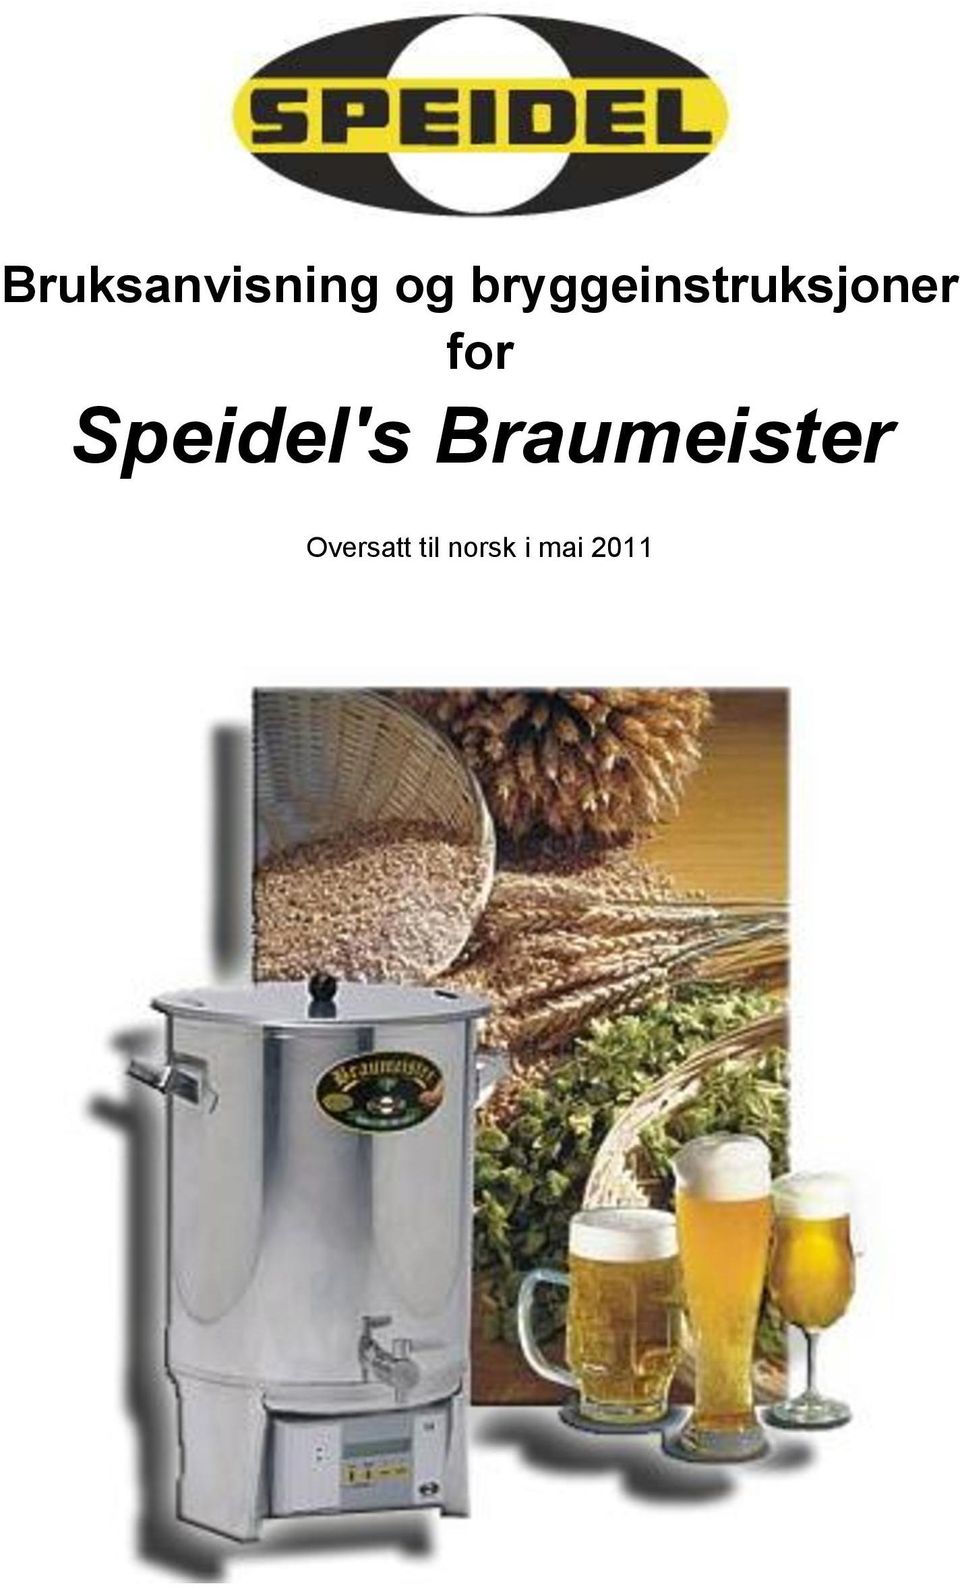 Speidel's Braumeister